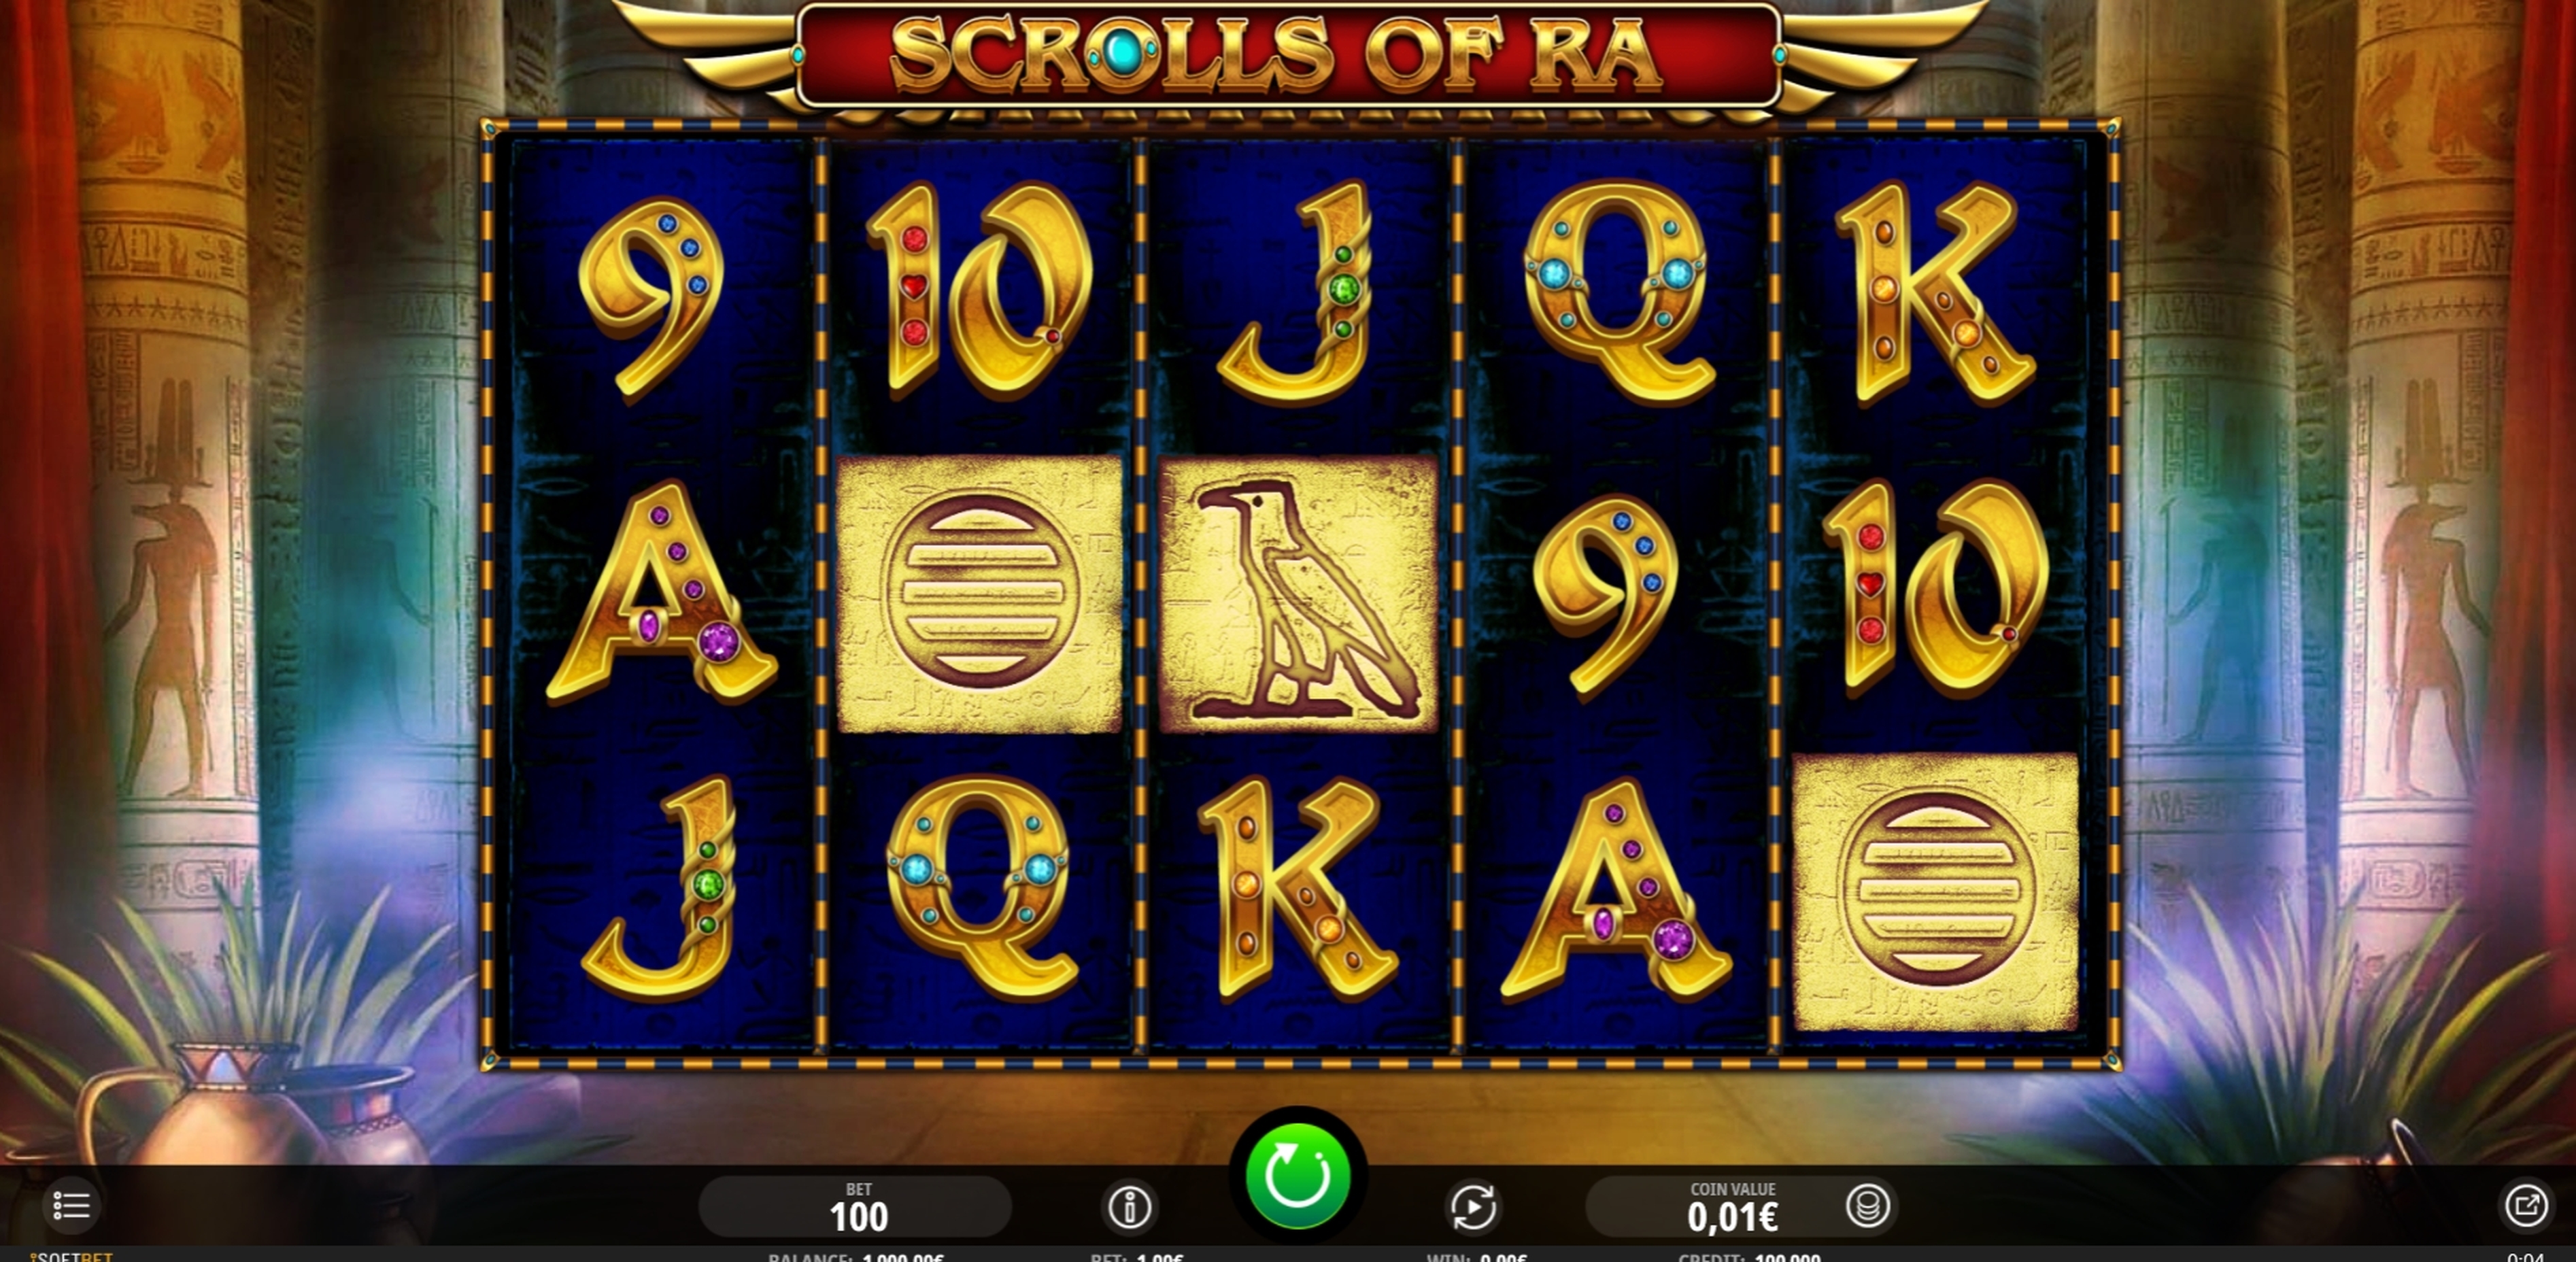 Reels in Scrolls of RA Slot Game by iSoftBet